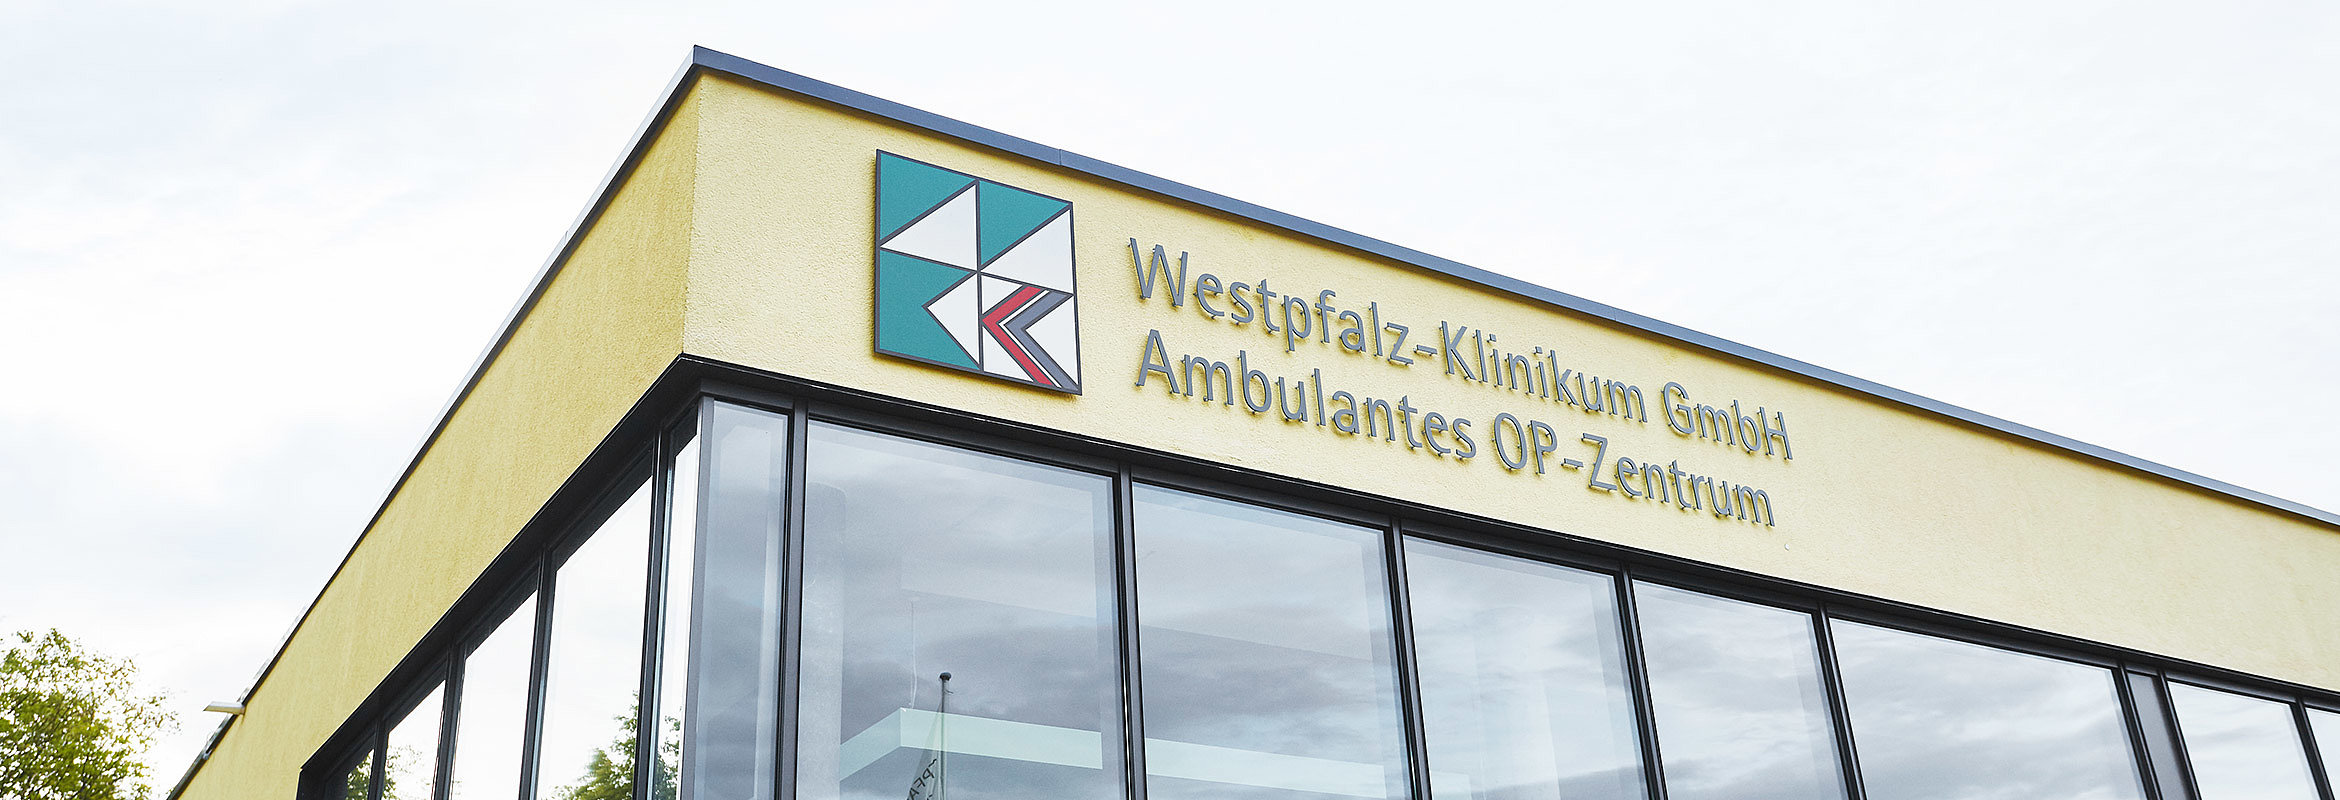 Ambulantes OP-Zentrum Westpfalz-Klinikum Kirchheimbolanden